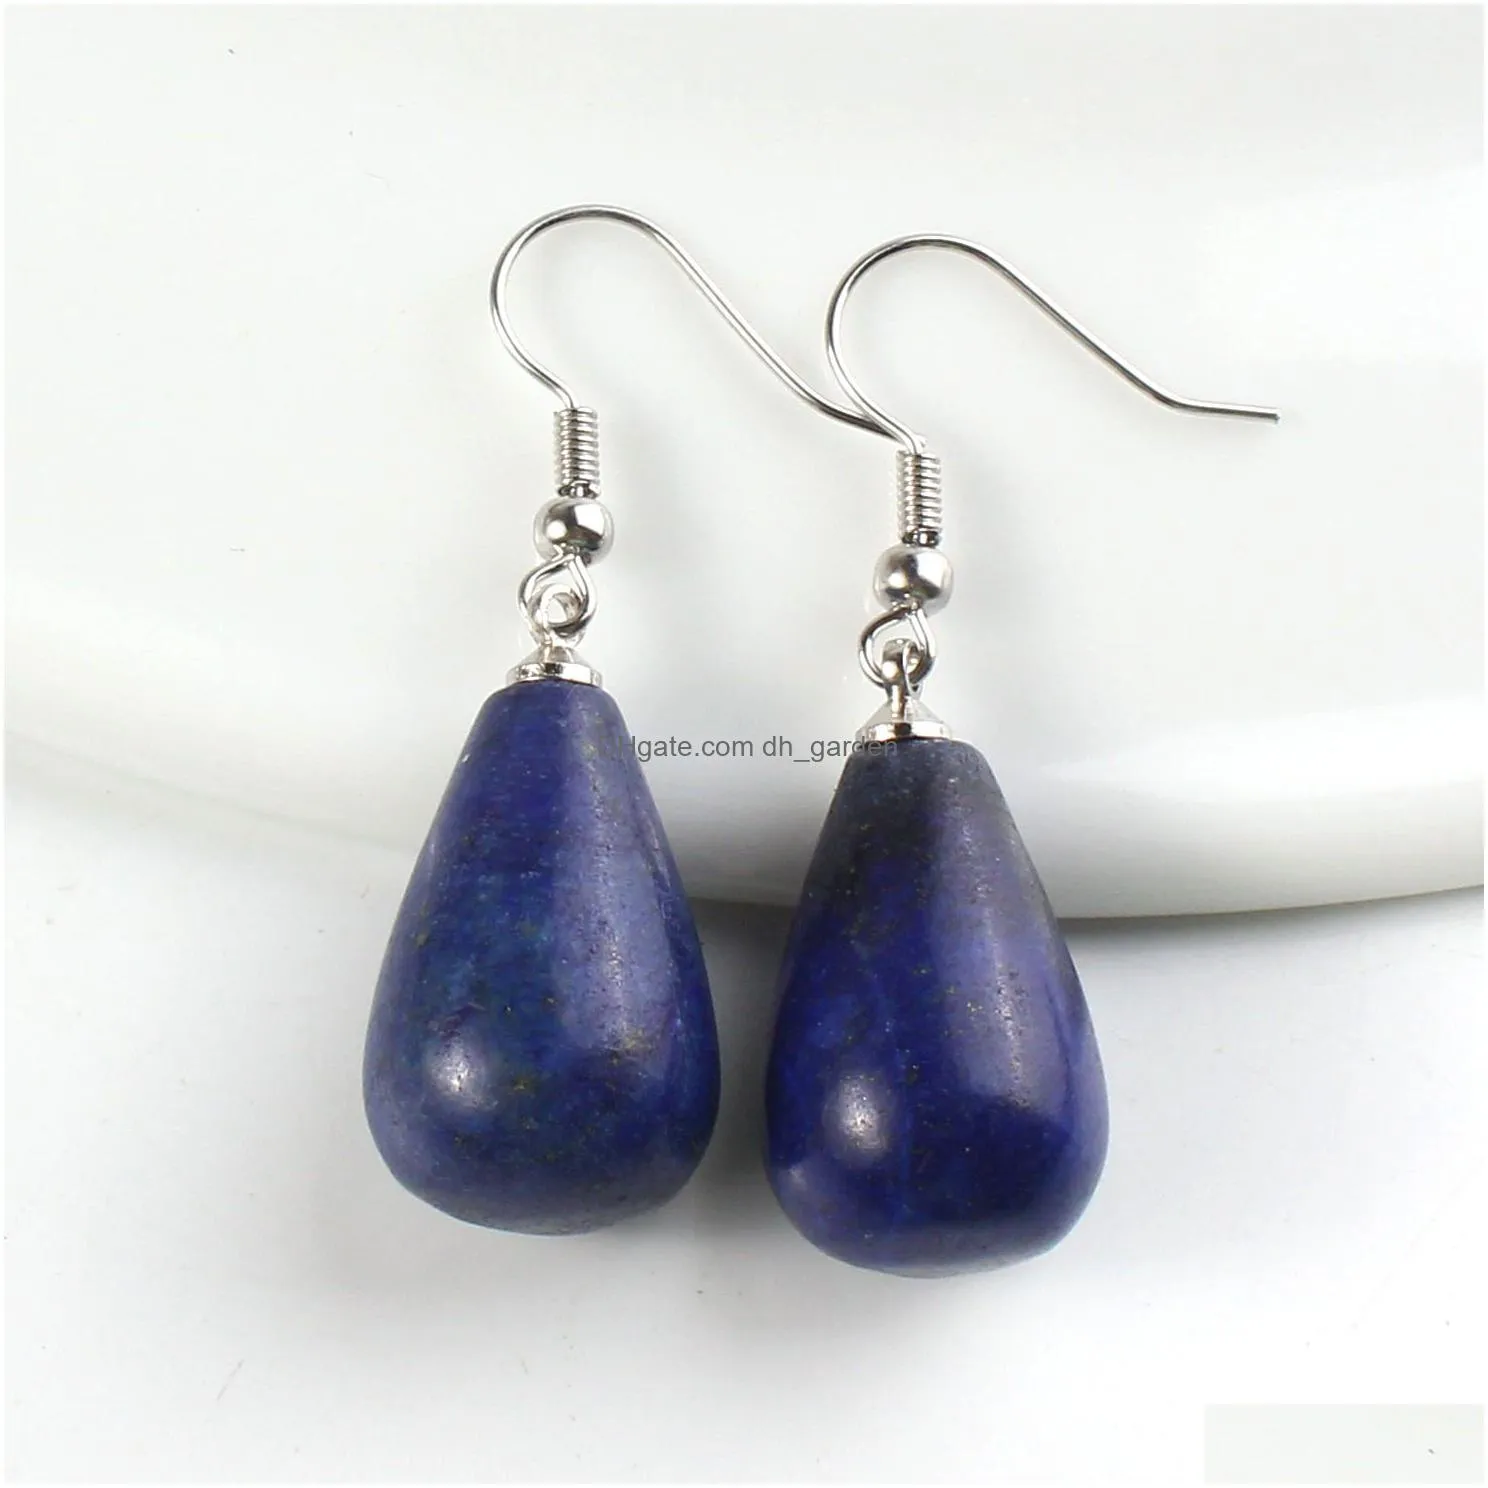 new summer women jewelry natural reiki chakra stone dangle earrings tear pendant water drop earring white purple crystal dangler gift